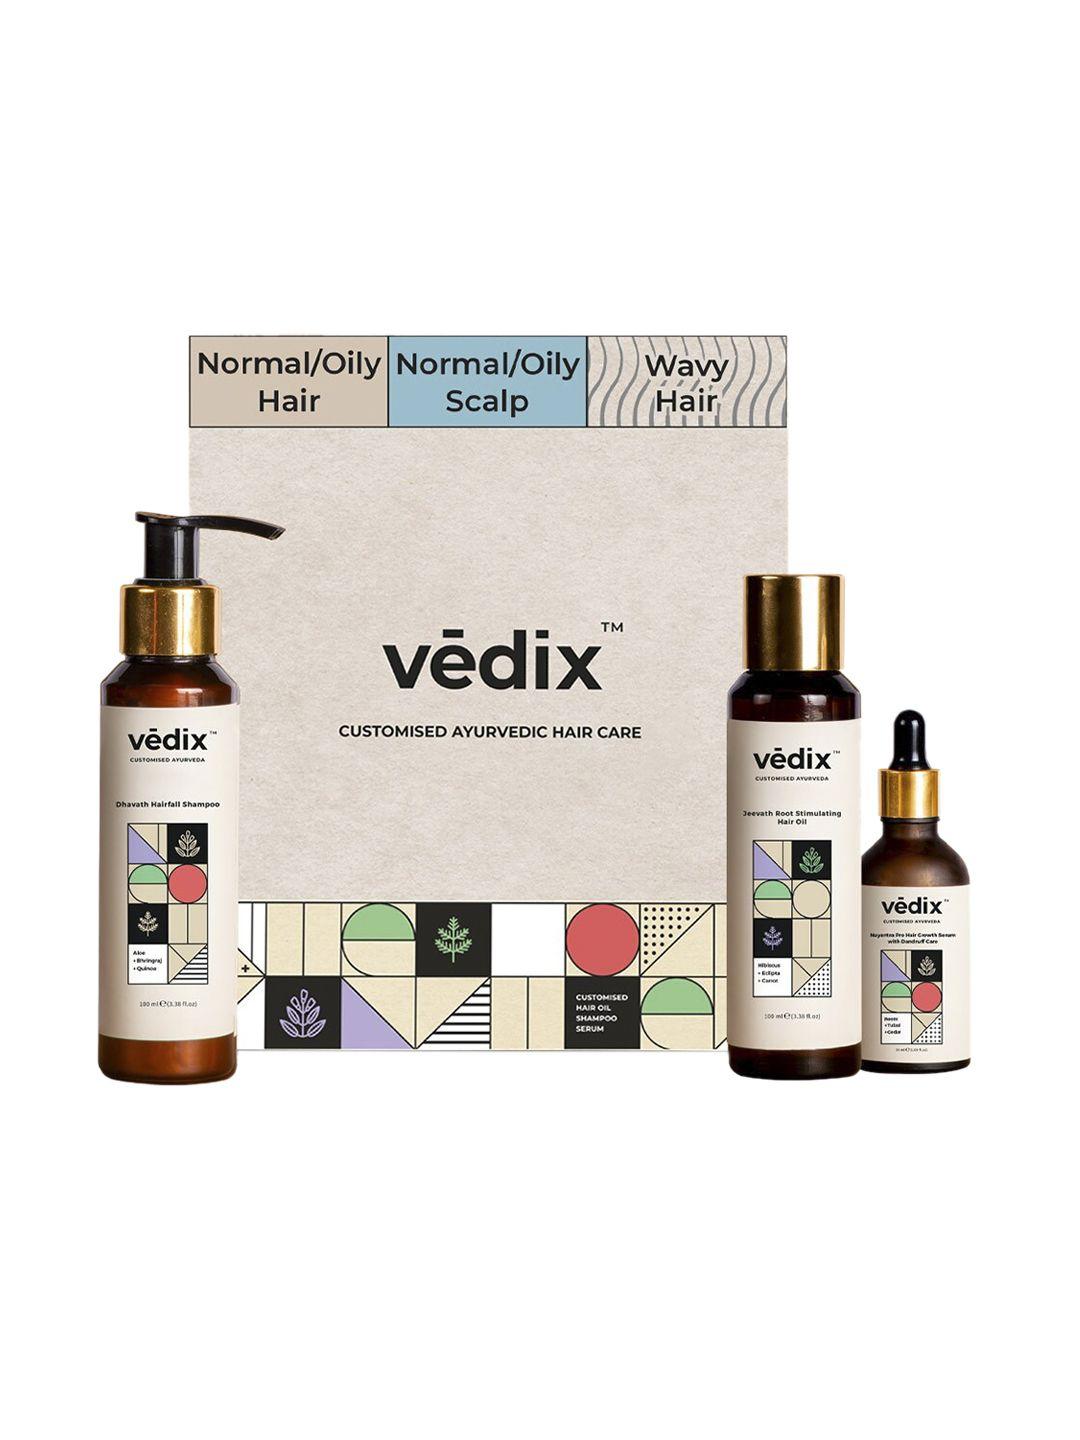 vedix customized hair fall control regimen for dry hair - normal oily scalp + wavy hair